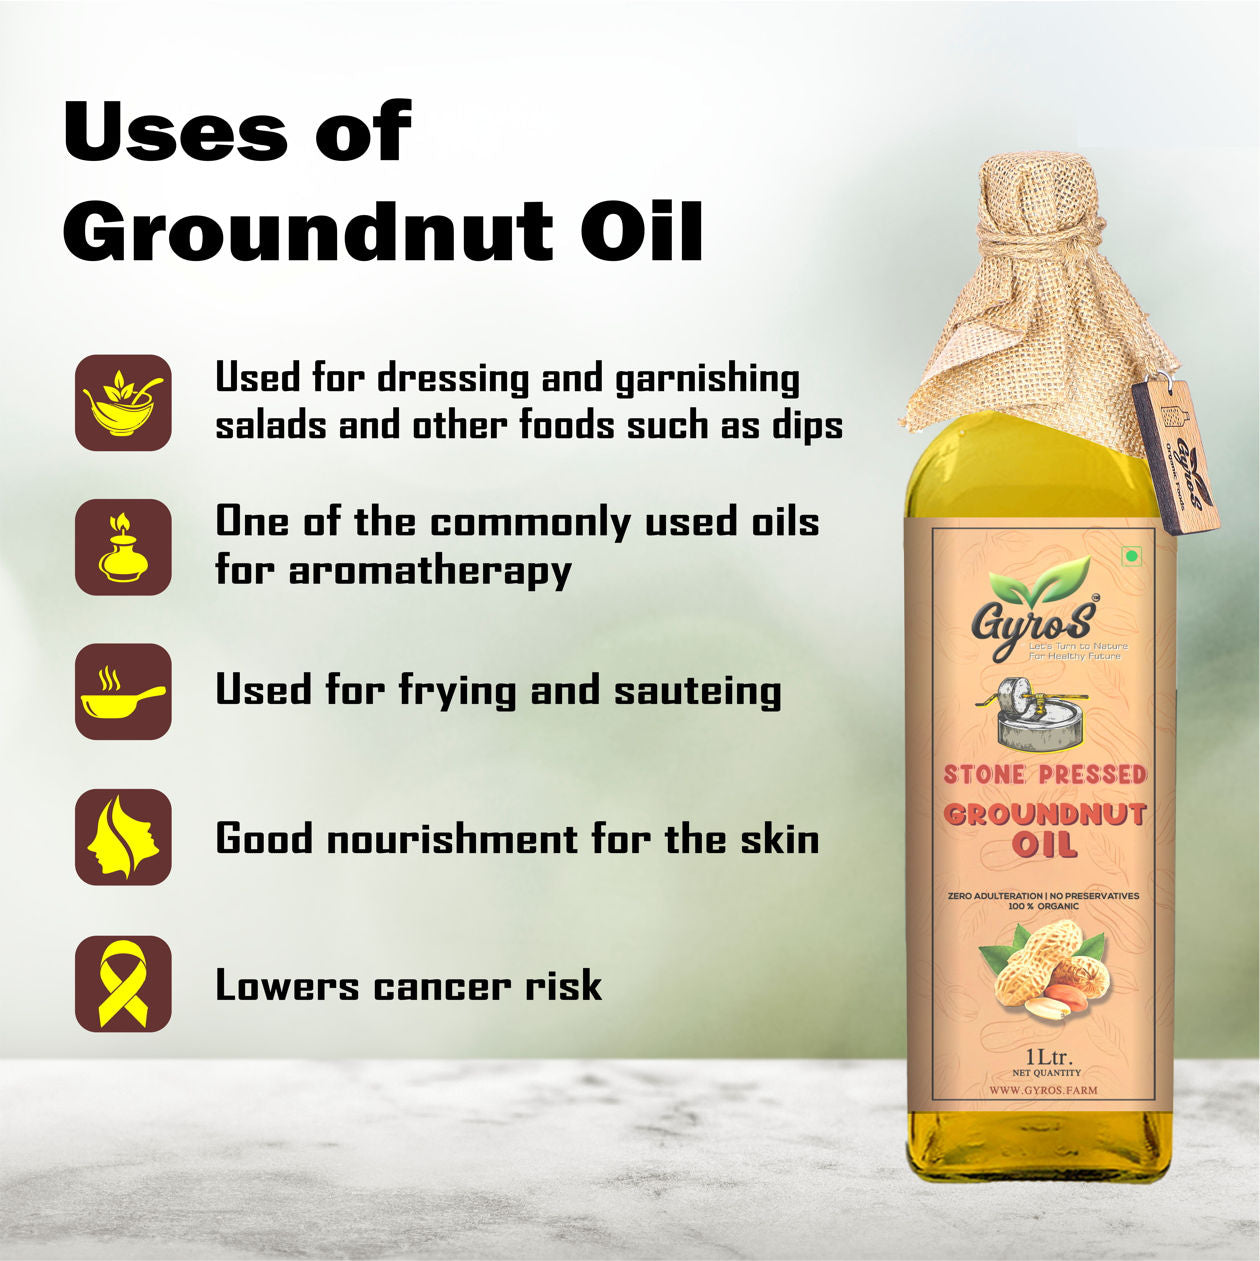 Gyros farm | Stone Cold Wood Pressed | Peanut Groundnut Oil | Chekku/Virgin